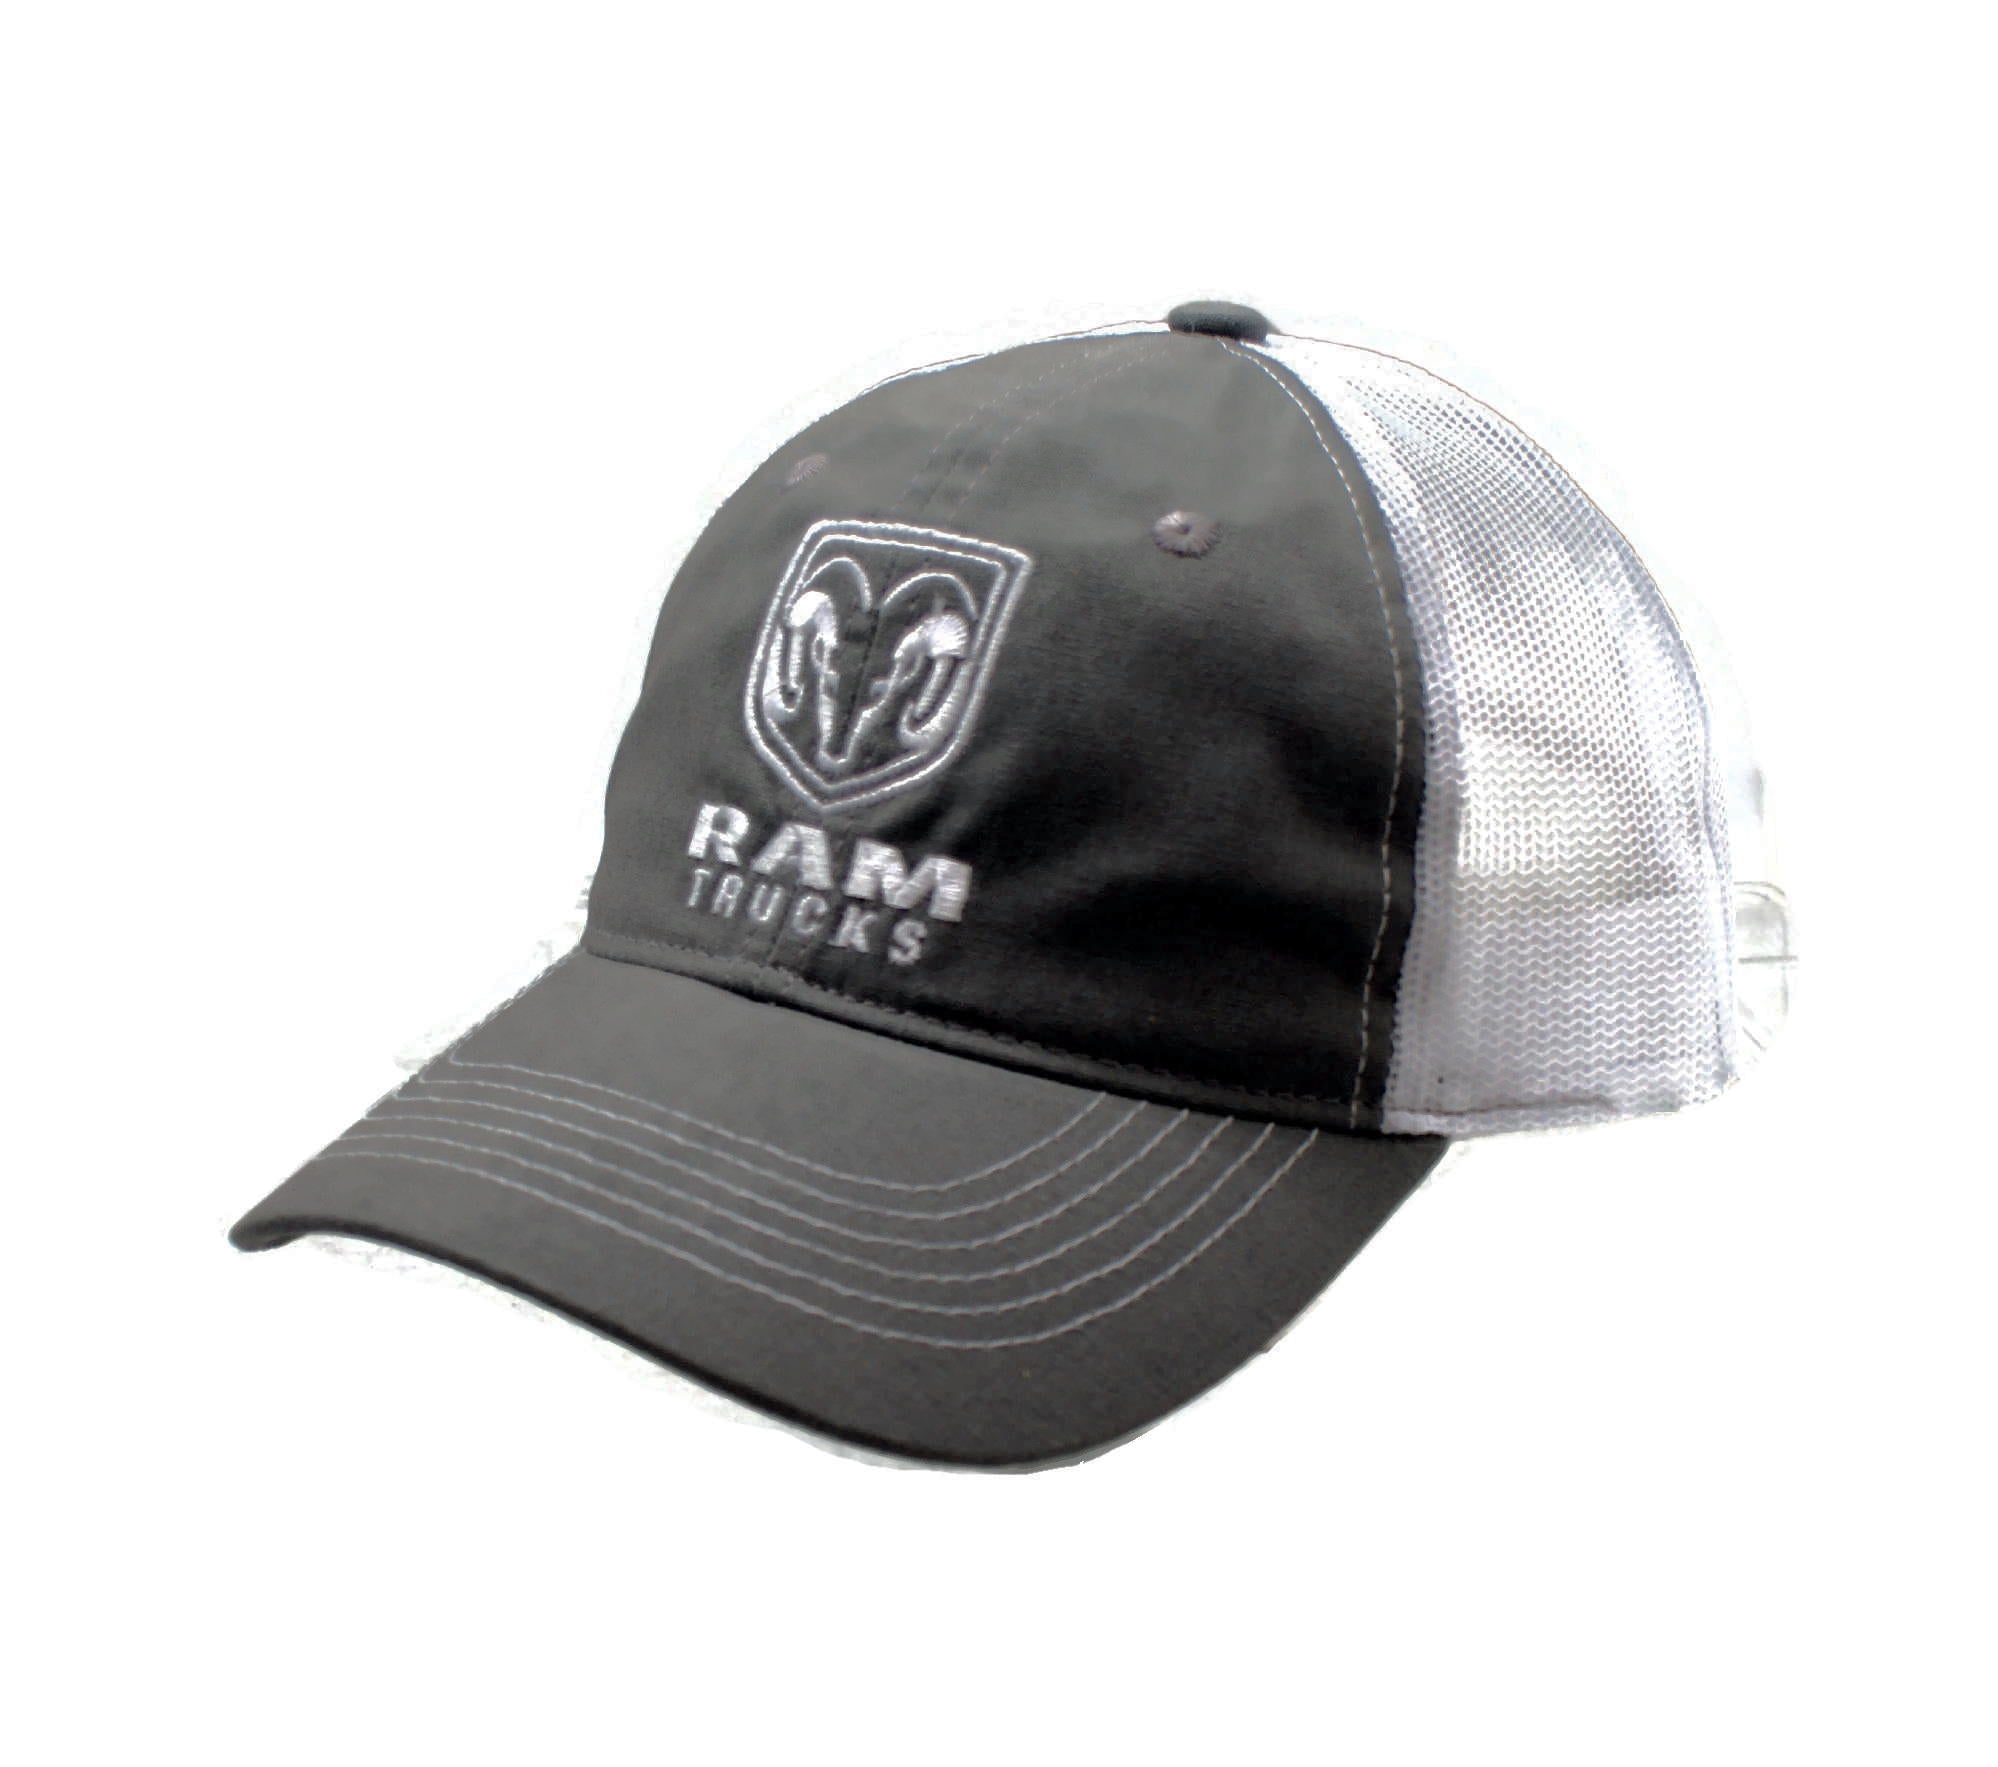 Hat - RAM Trucks Vented Trucker Style Mesh Cap Grey & White